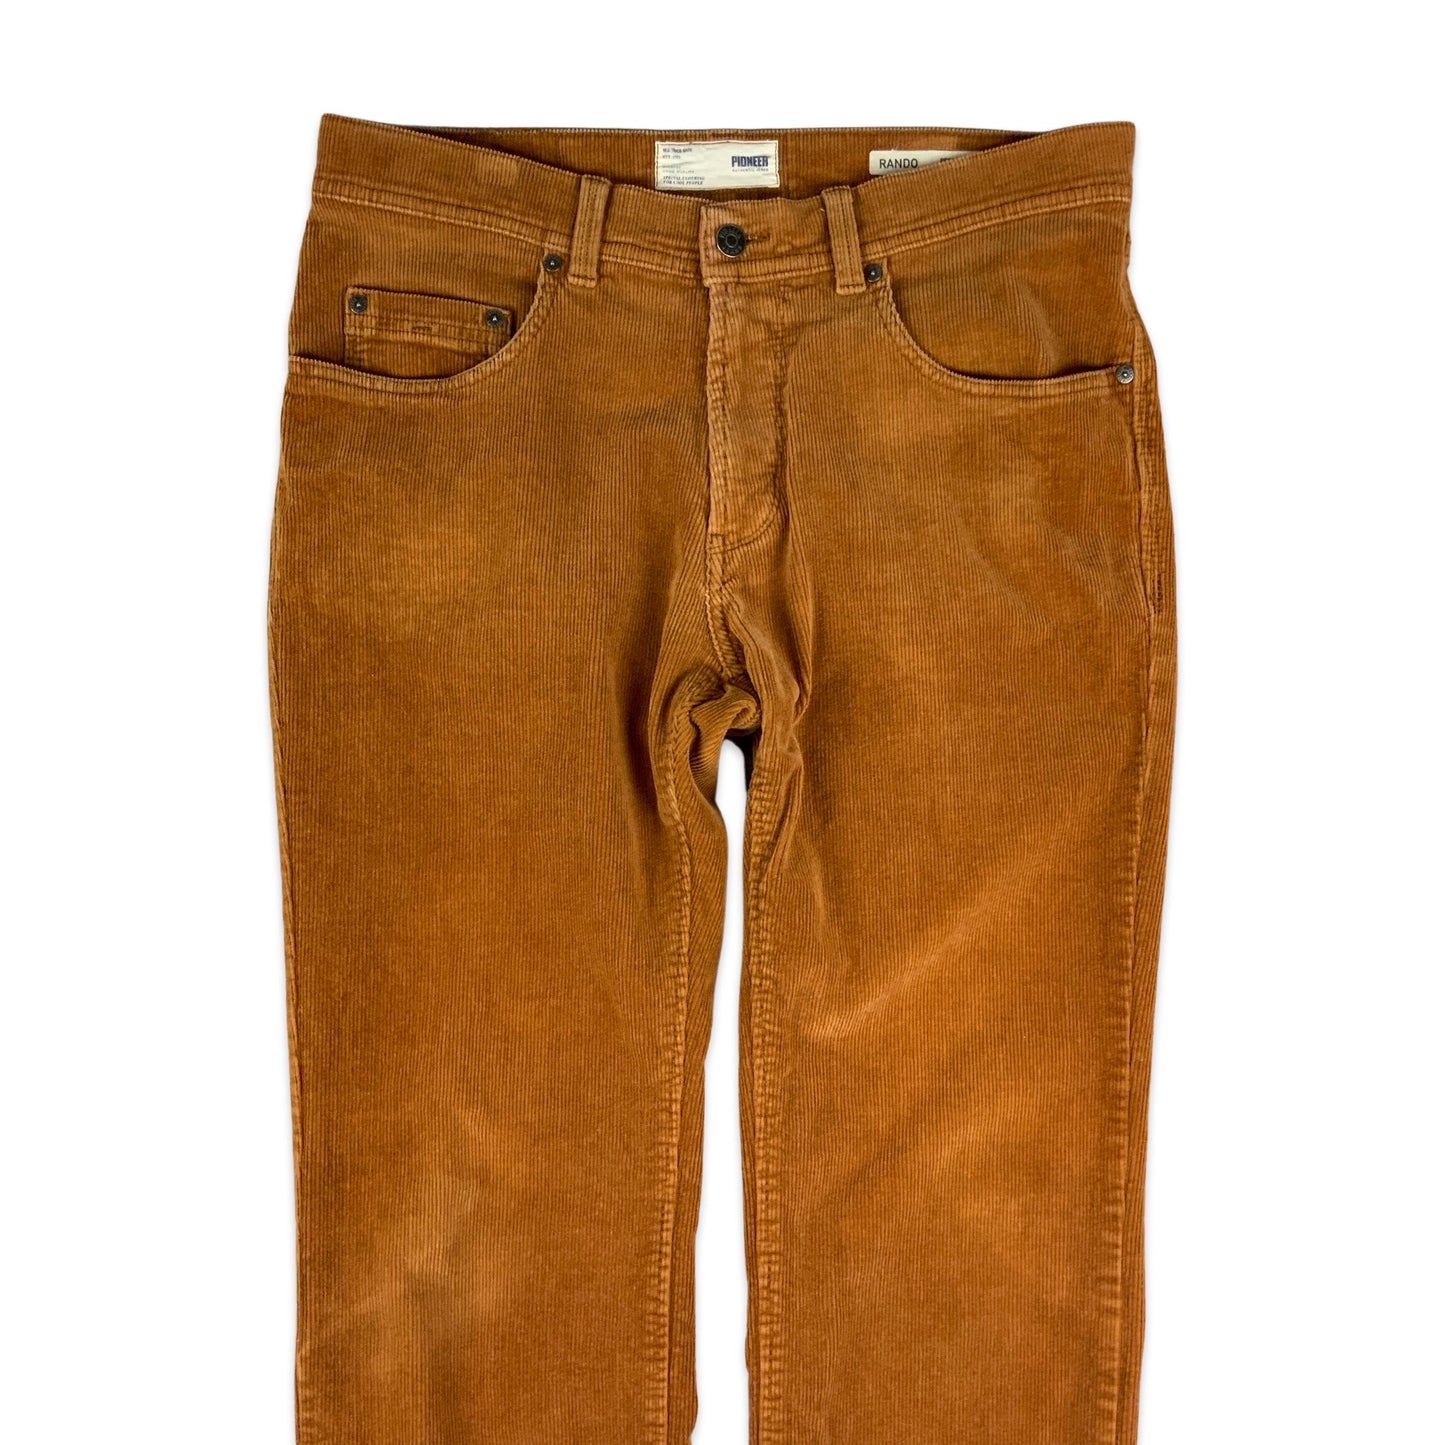 Vintage Orange Cord Trousers 34W 29L